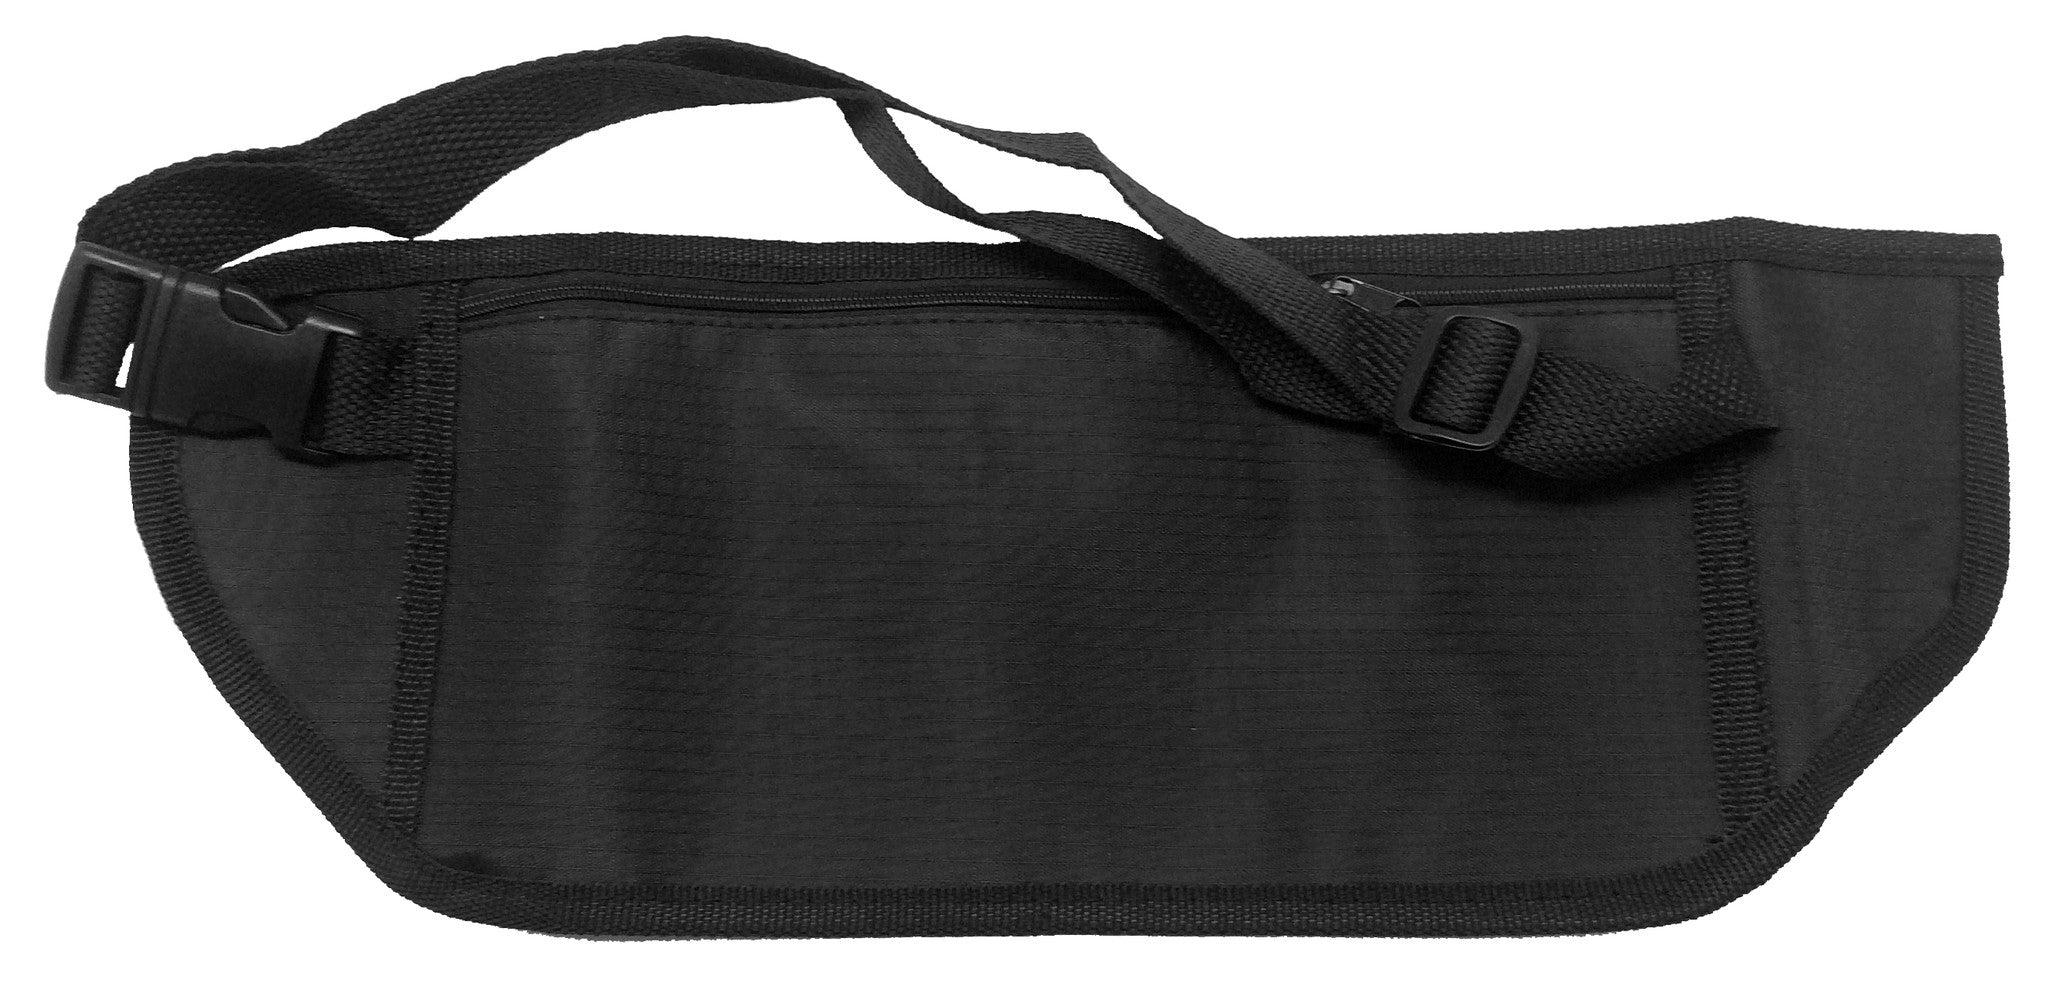 Durable & Elegant Travel Hip Bag with Adjustable Strap - Soft & Flexible Protective Waist Pouch for Men & Women – (Black, 38.5x14cm)